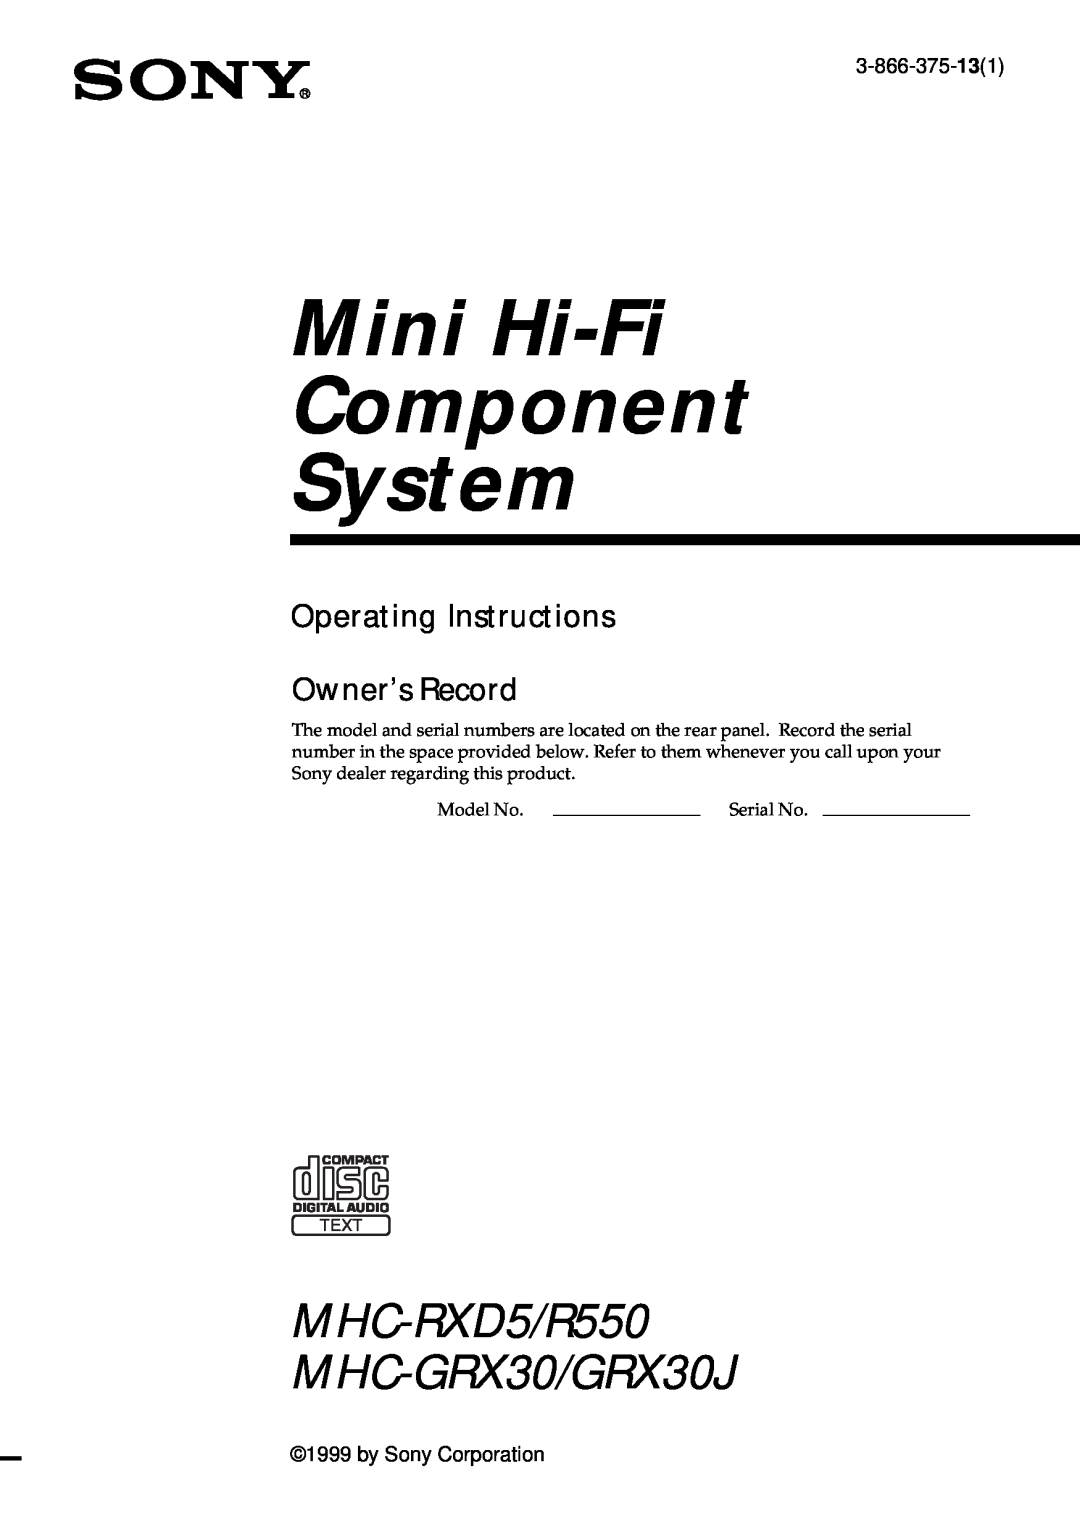 Sony MHC-R550 operating instructions Mini Hi-Fi Component System, MHC-RXD5/R550 MHC-GRX30/GRX30J, 3-866-375-131, Text 